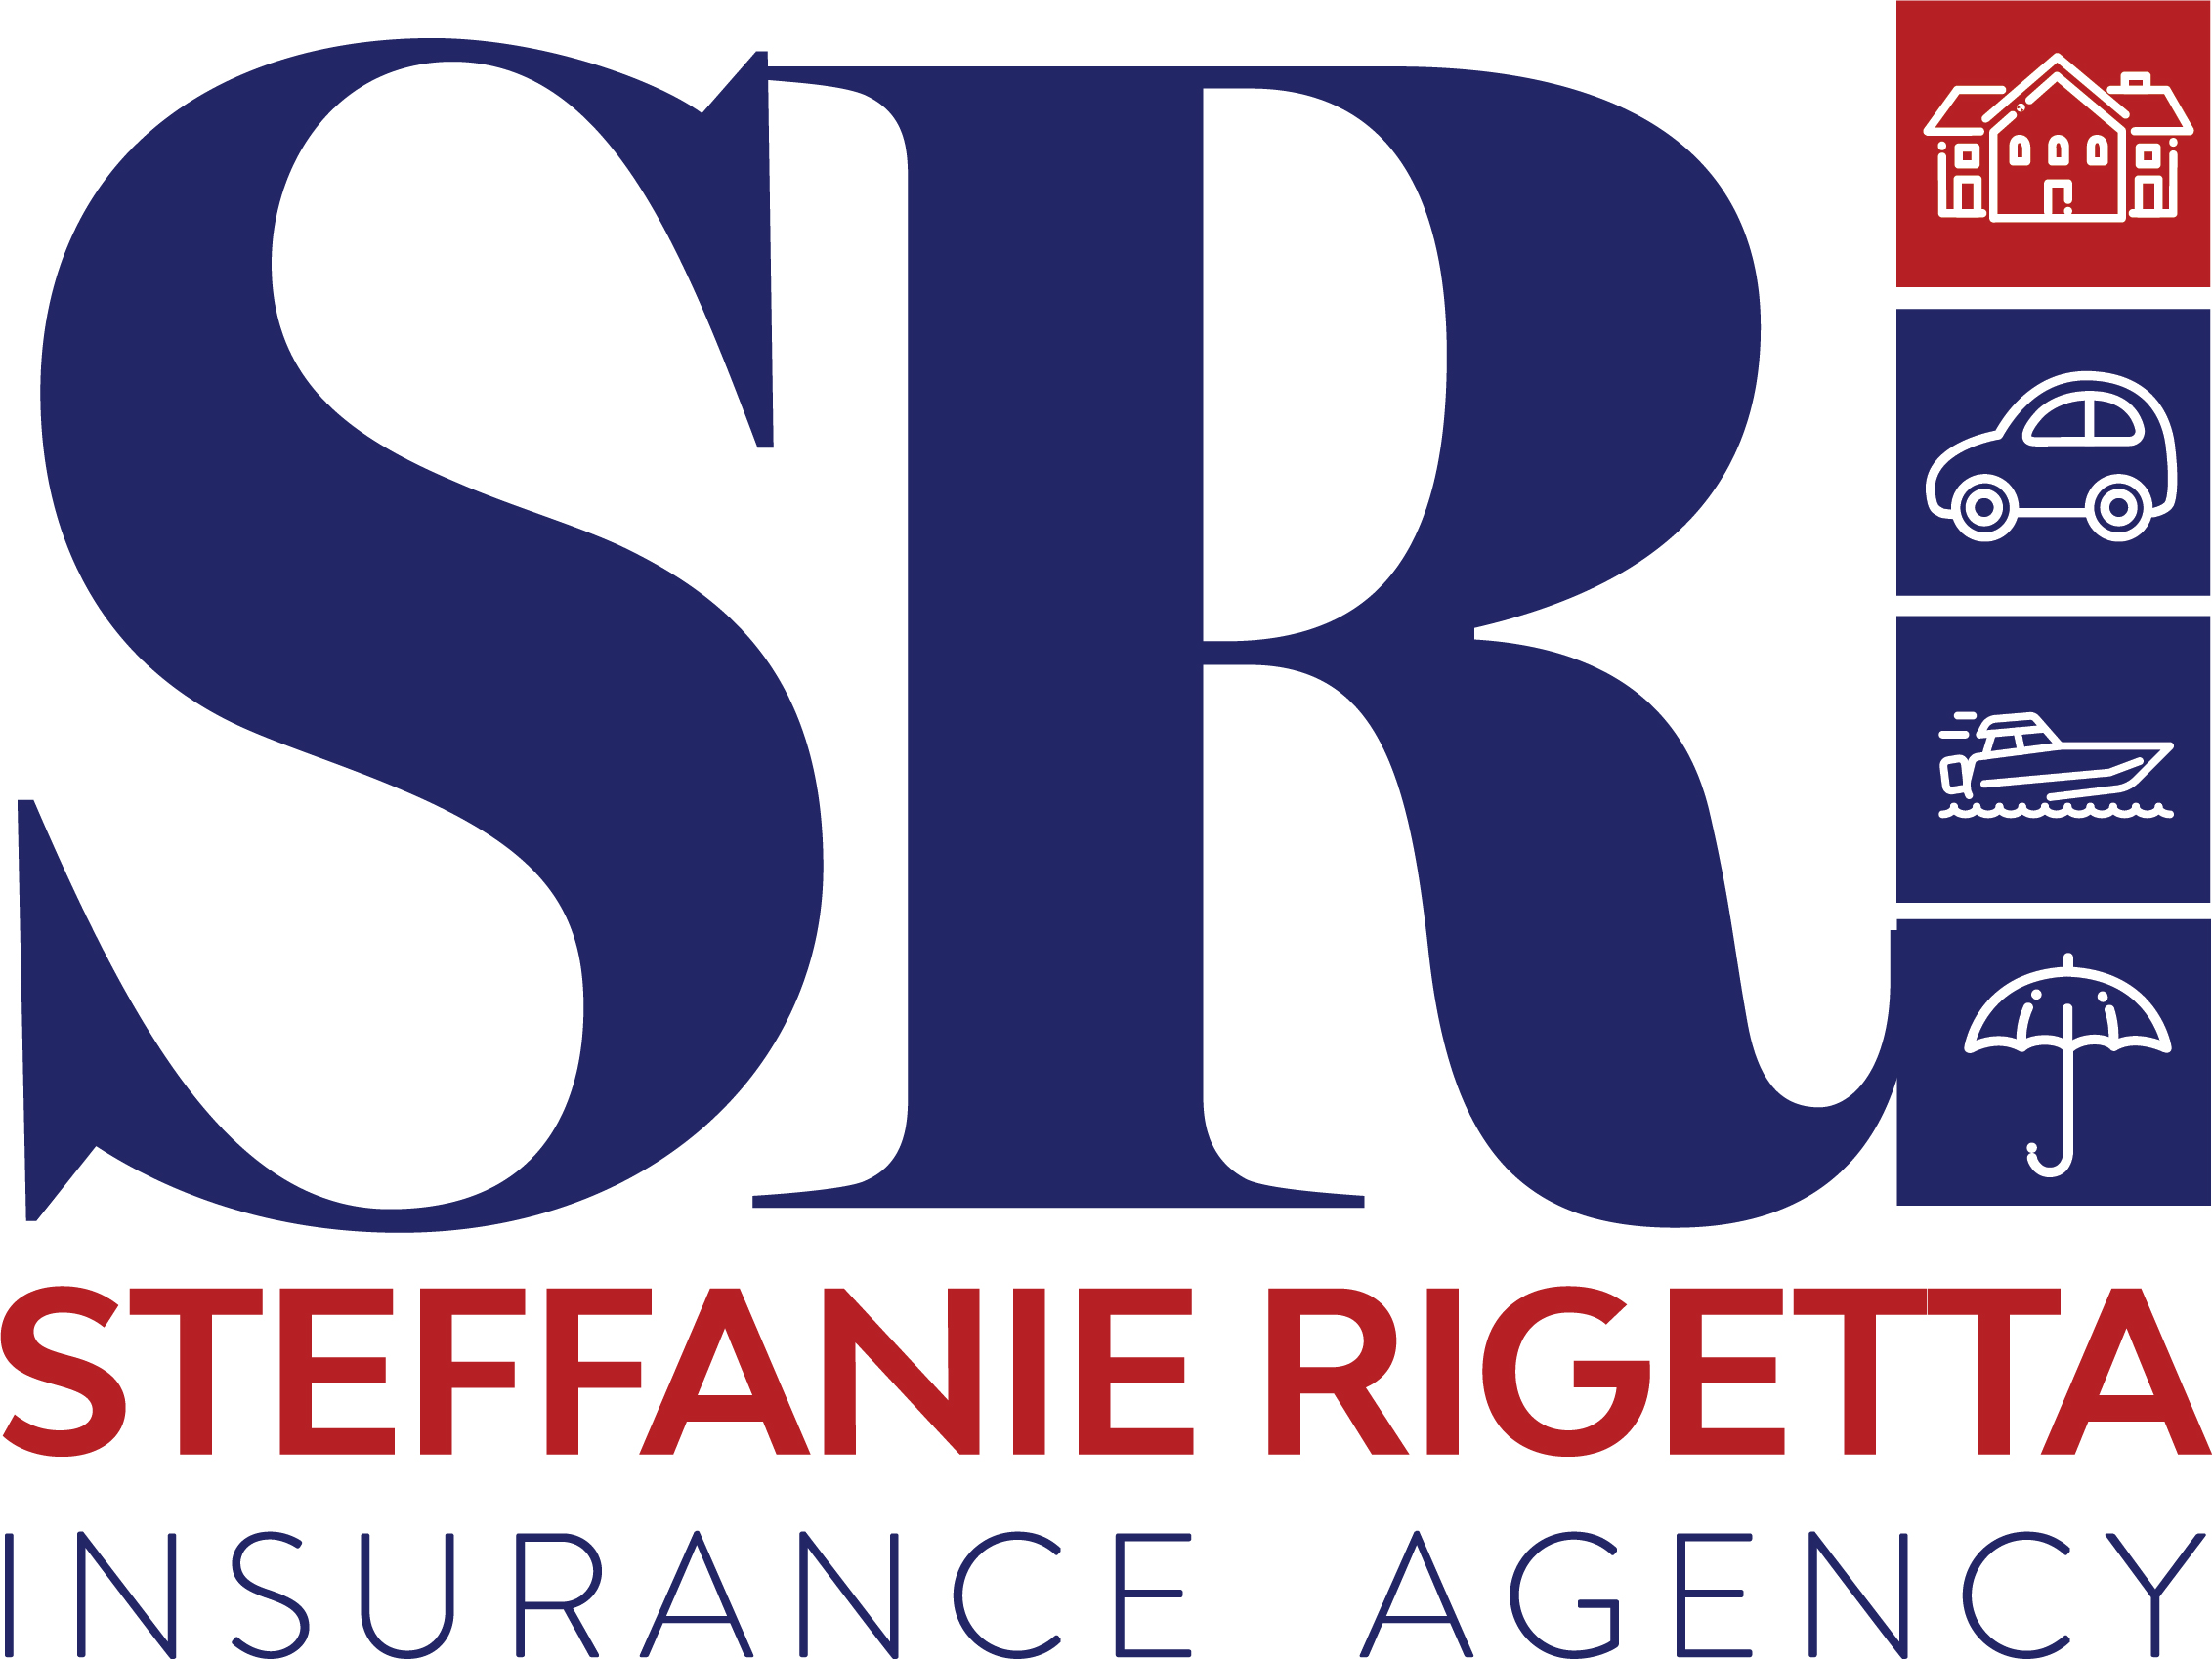 Steffanie Rigetta Insurance Agency